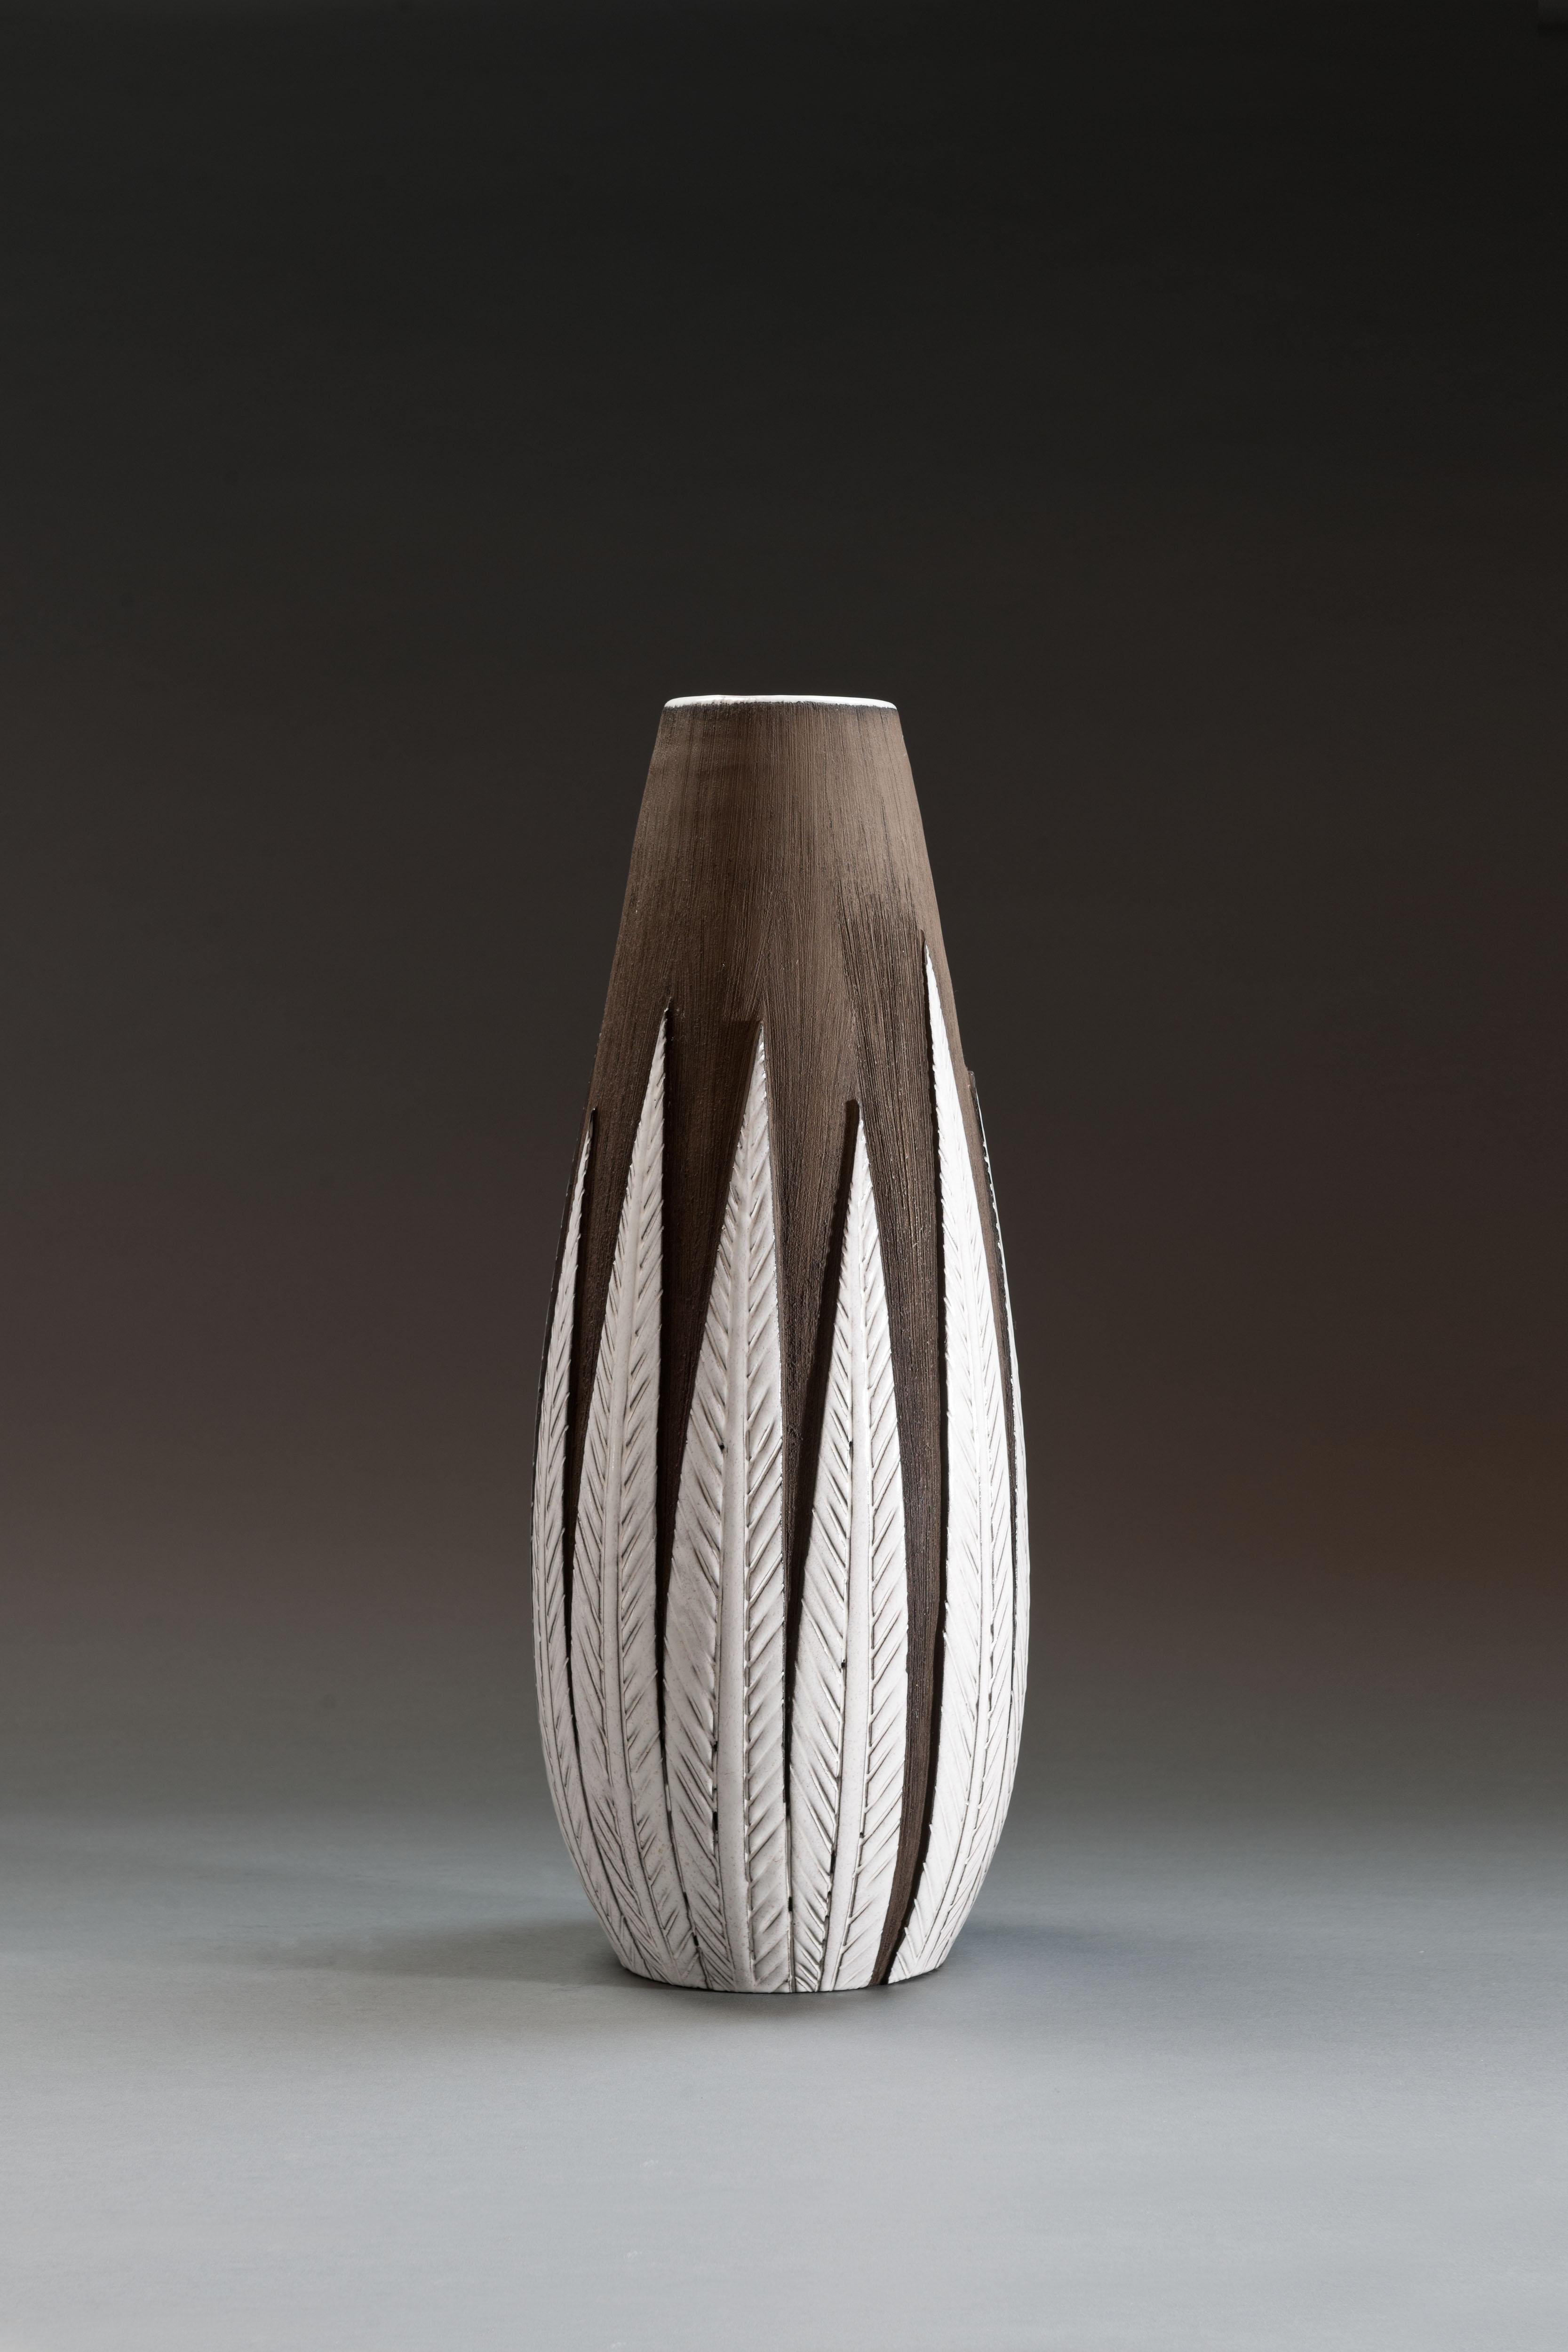 Swedish Anna-Lisa Thomson Ceramic 'Paprika' Vases (3) by Upsala Ekeby For Sale